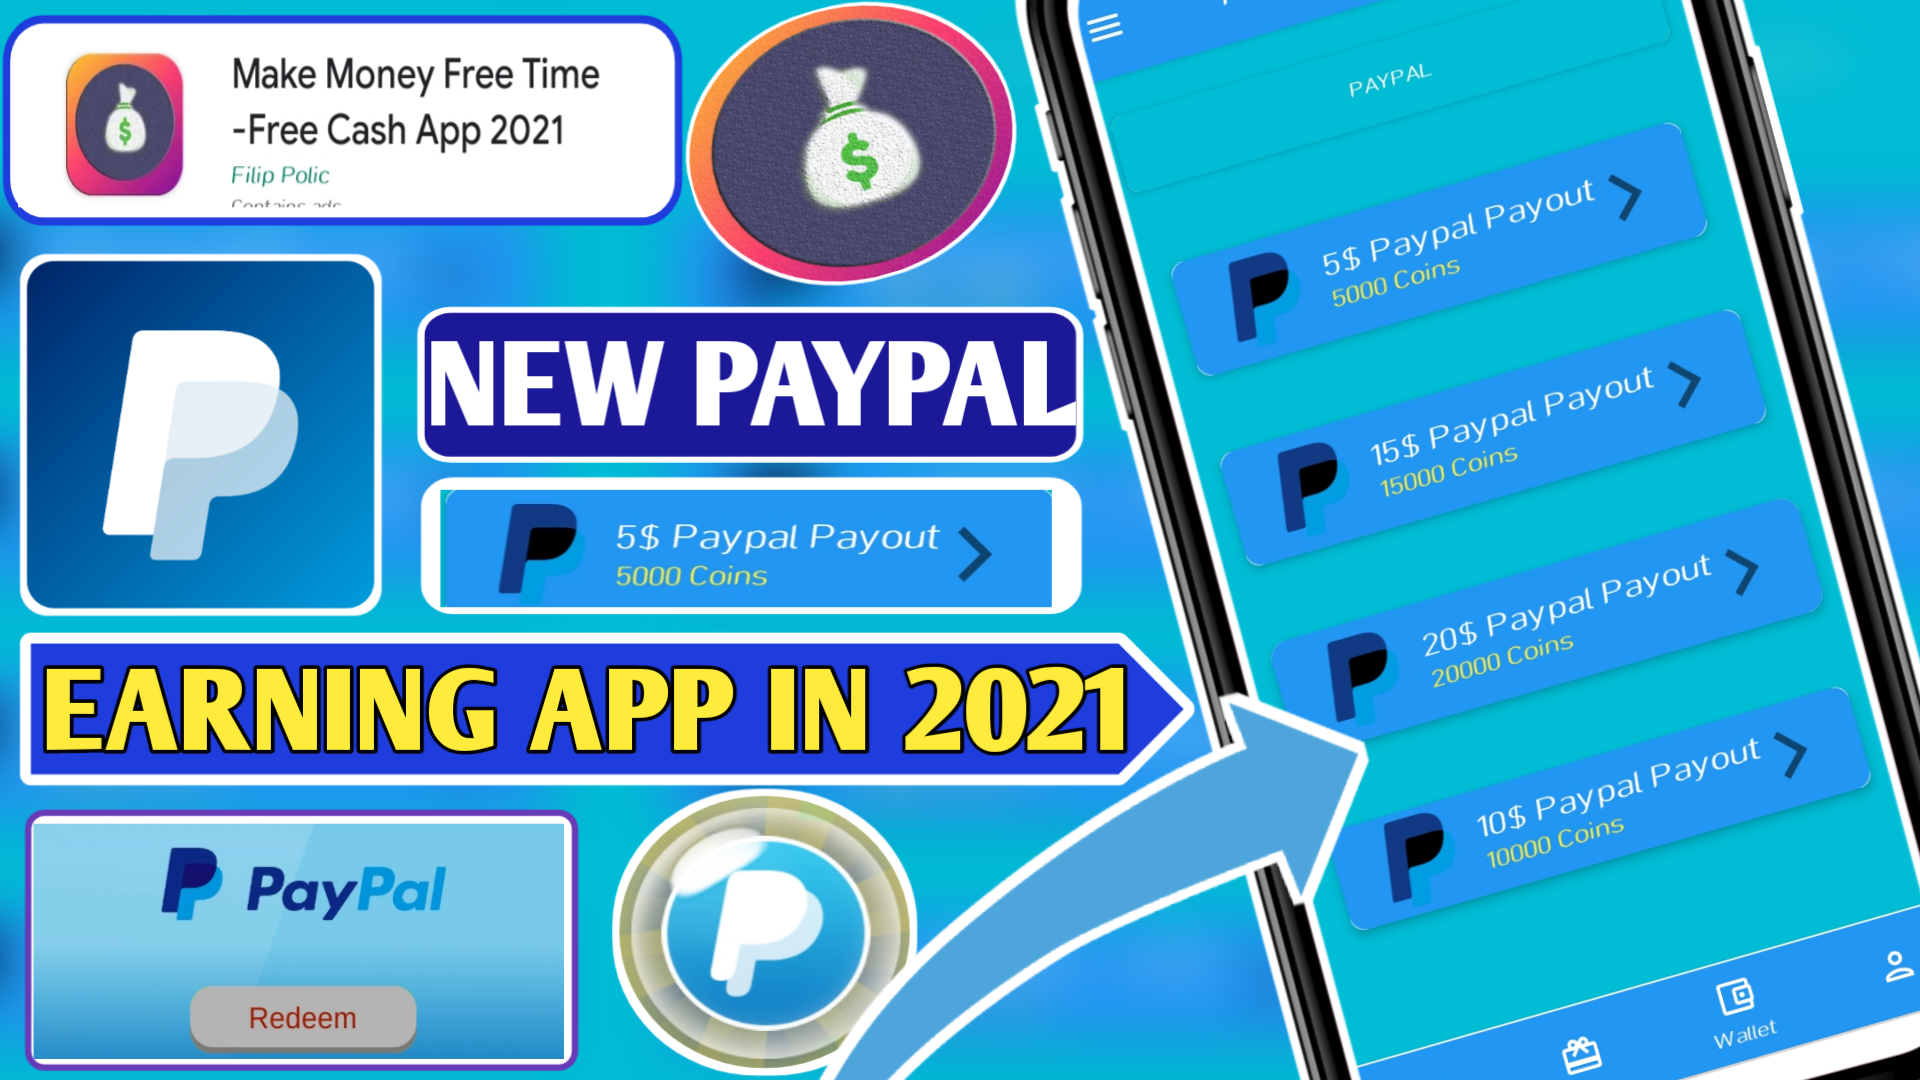 Make Money Free Time Free Cash App 2021